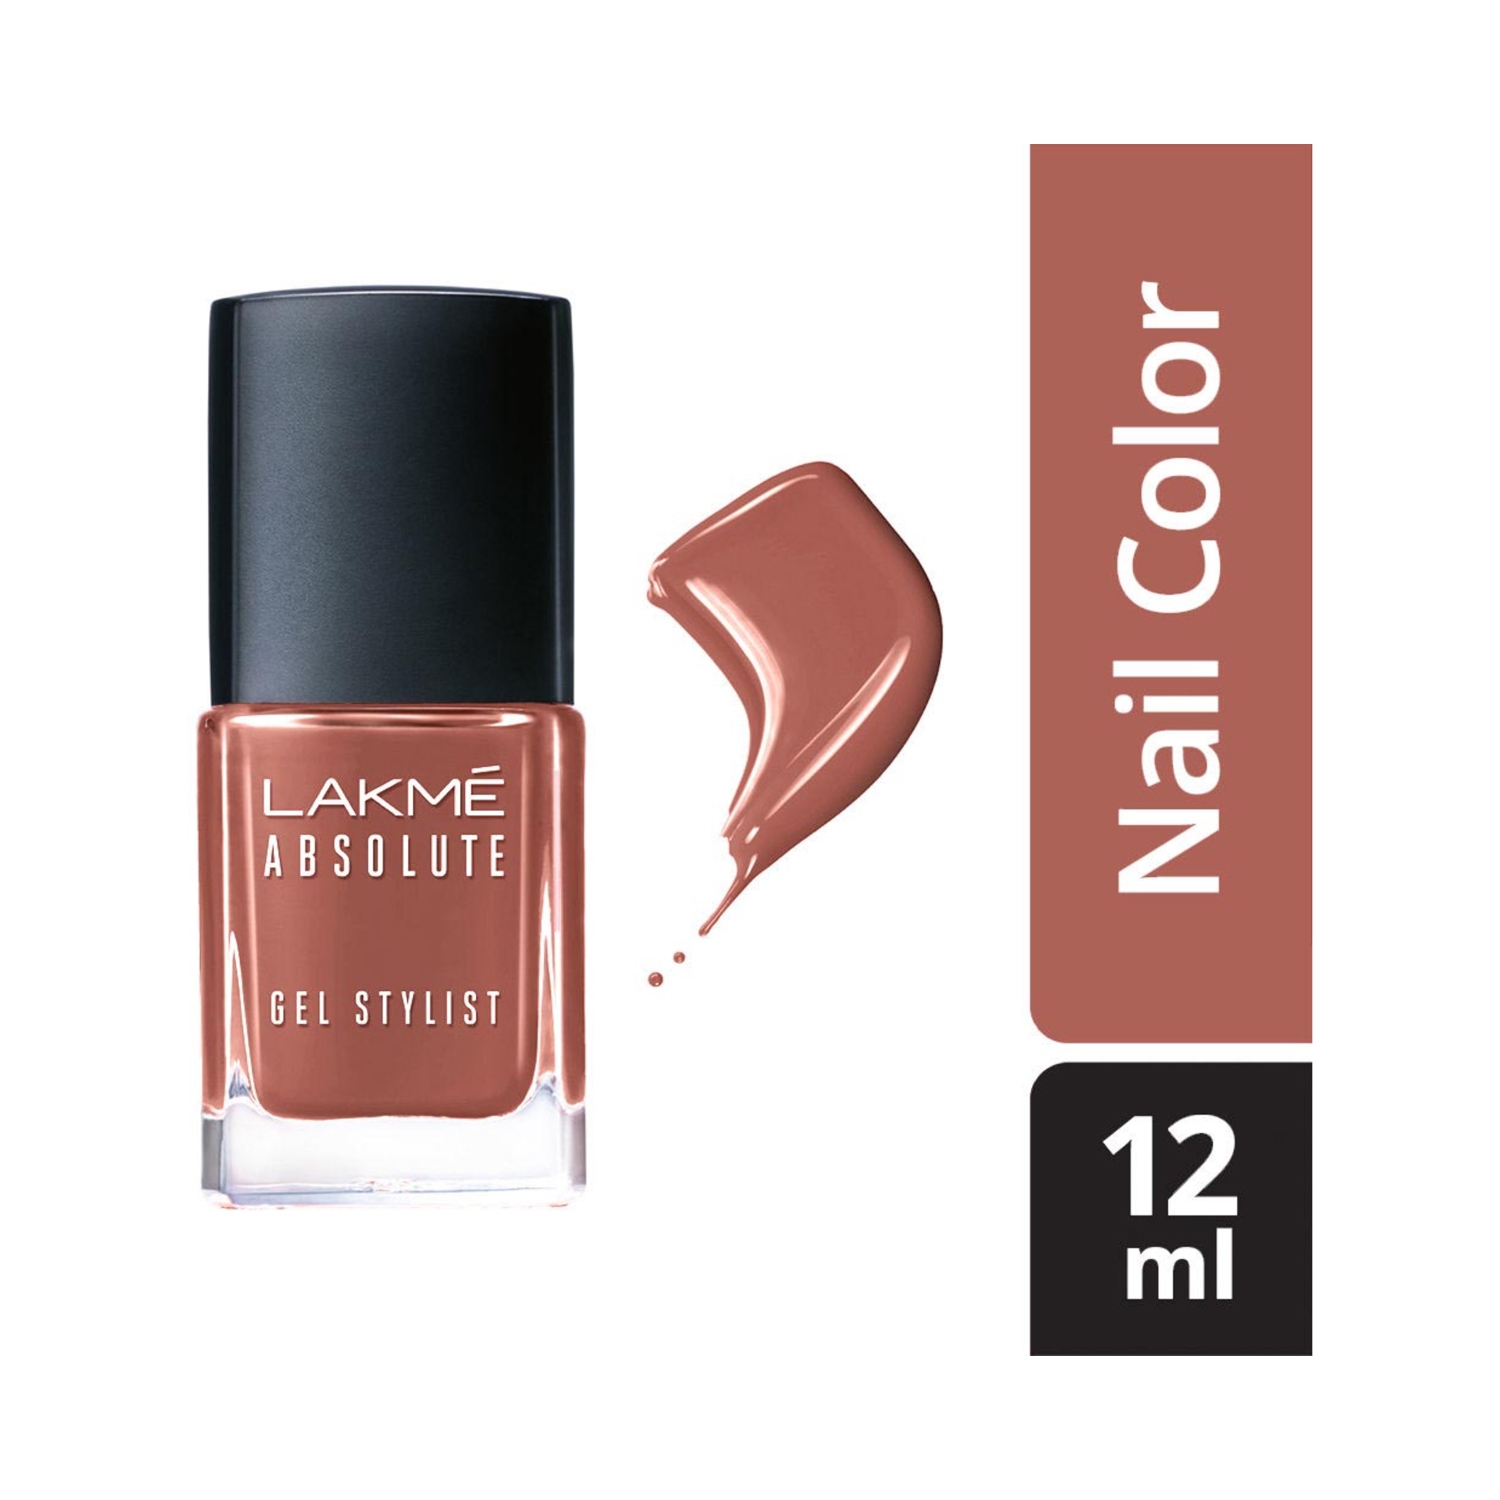 Lakme | Lakme Absolute Gel Stylist Nail Color - 33 Saddle (12ml)